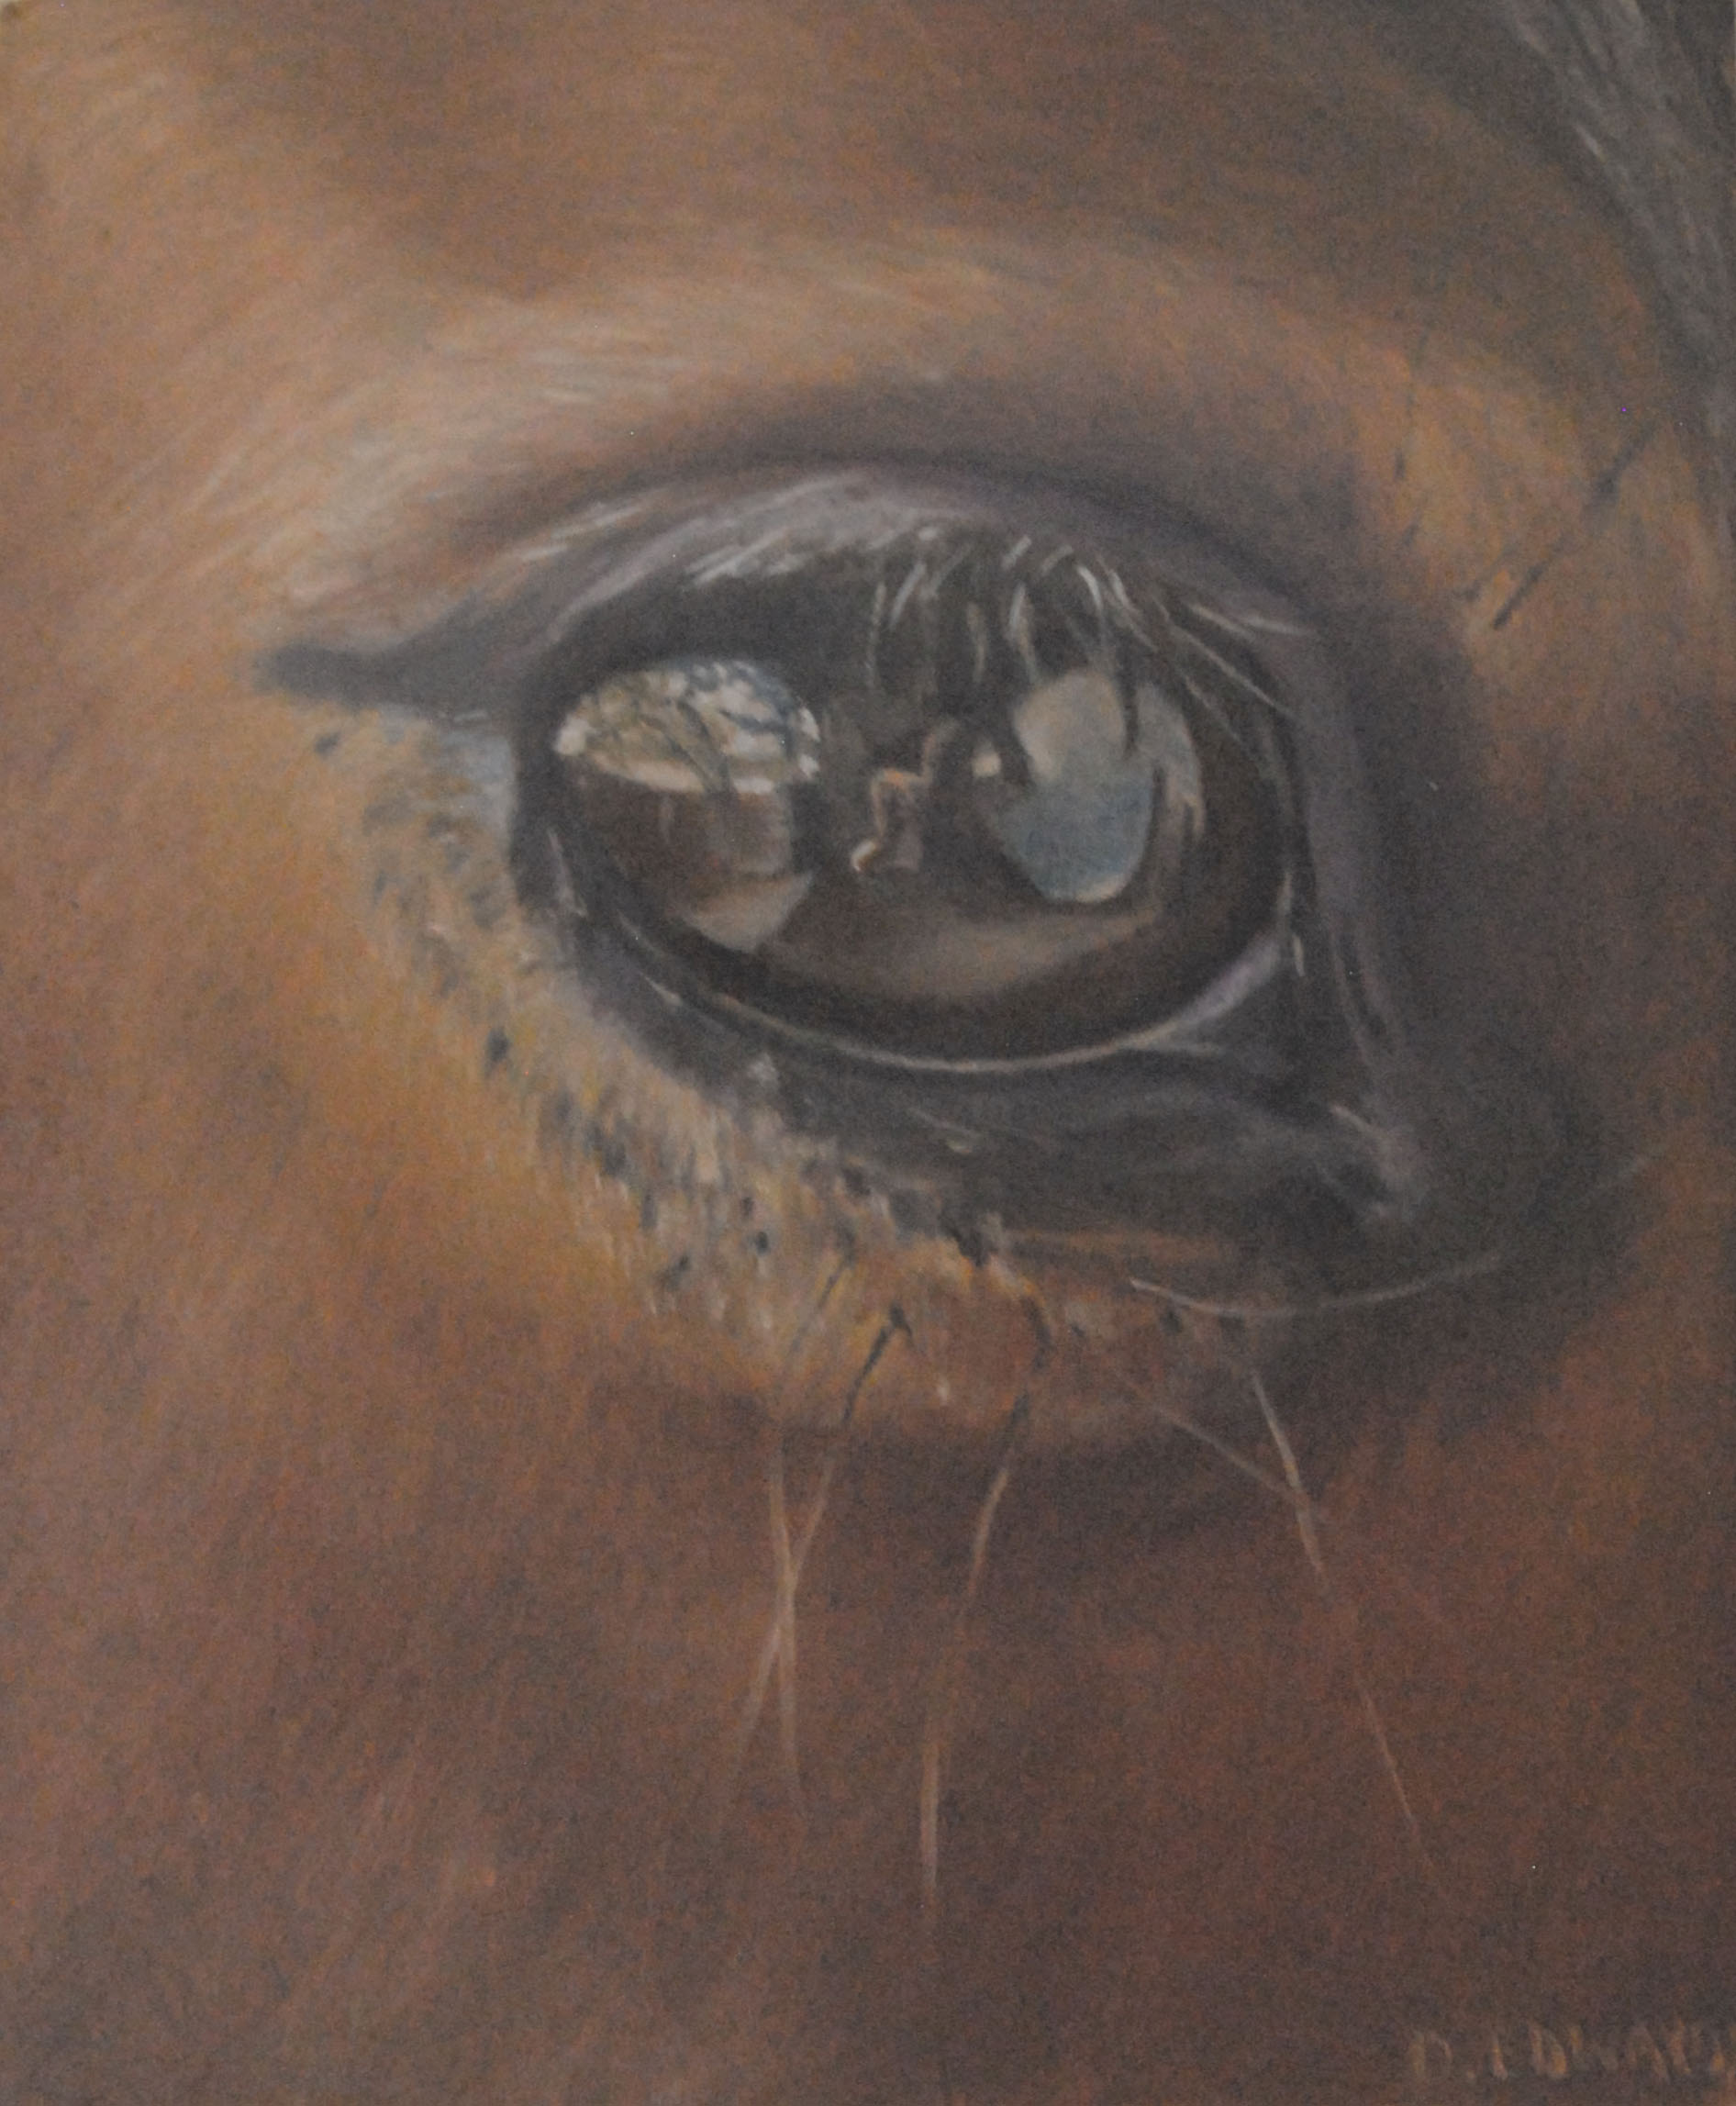 The girl in my eye. by Deborah Edwards | Lethbridge 20000 2021 Finalists | Lethbridge Gallery